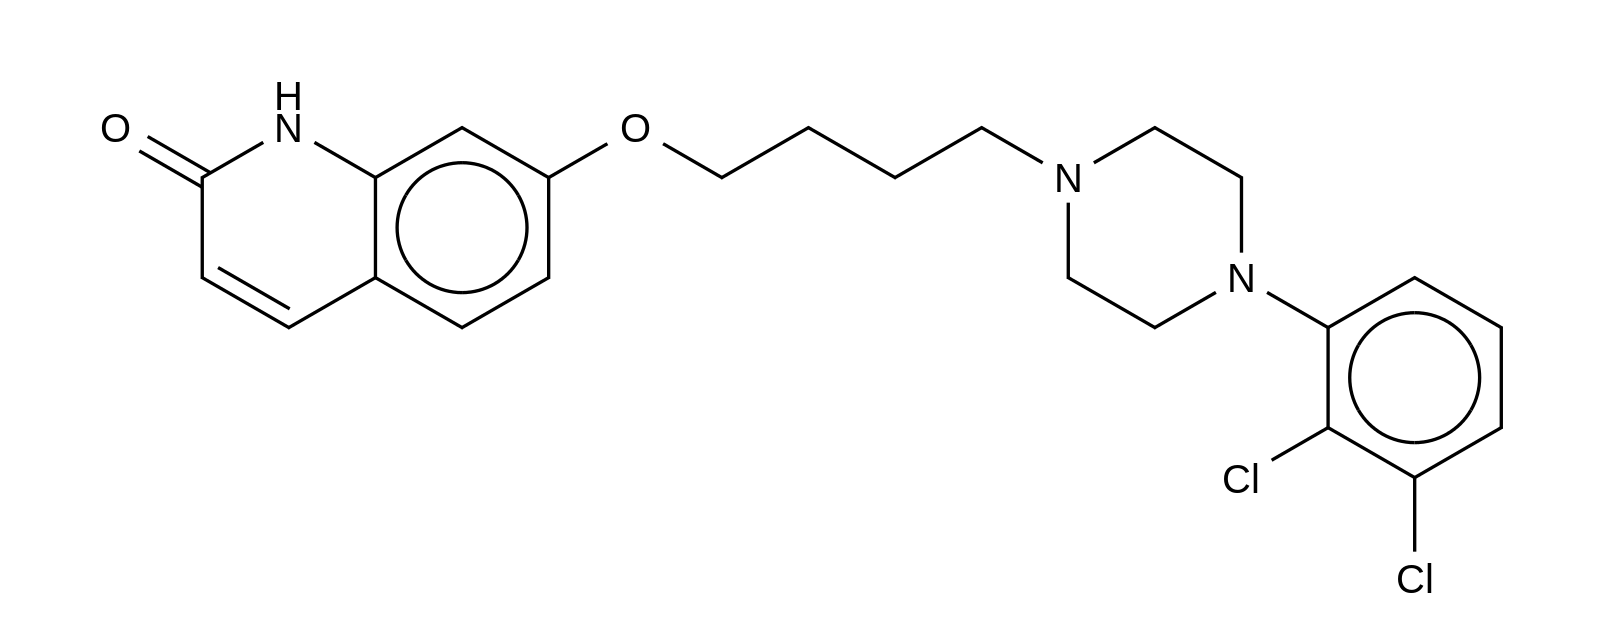 Dehydro aripiprazole